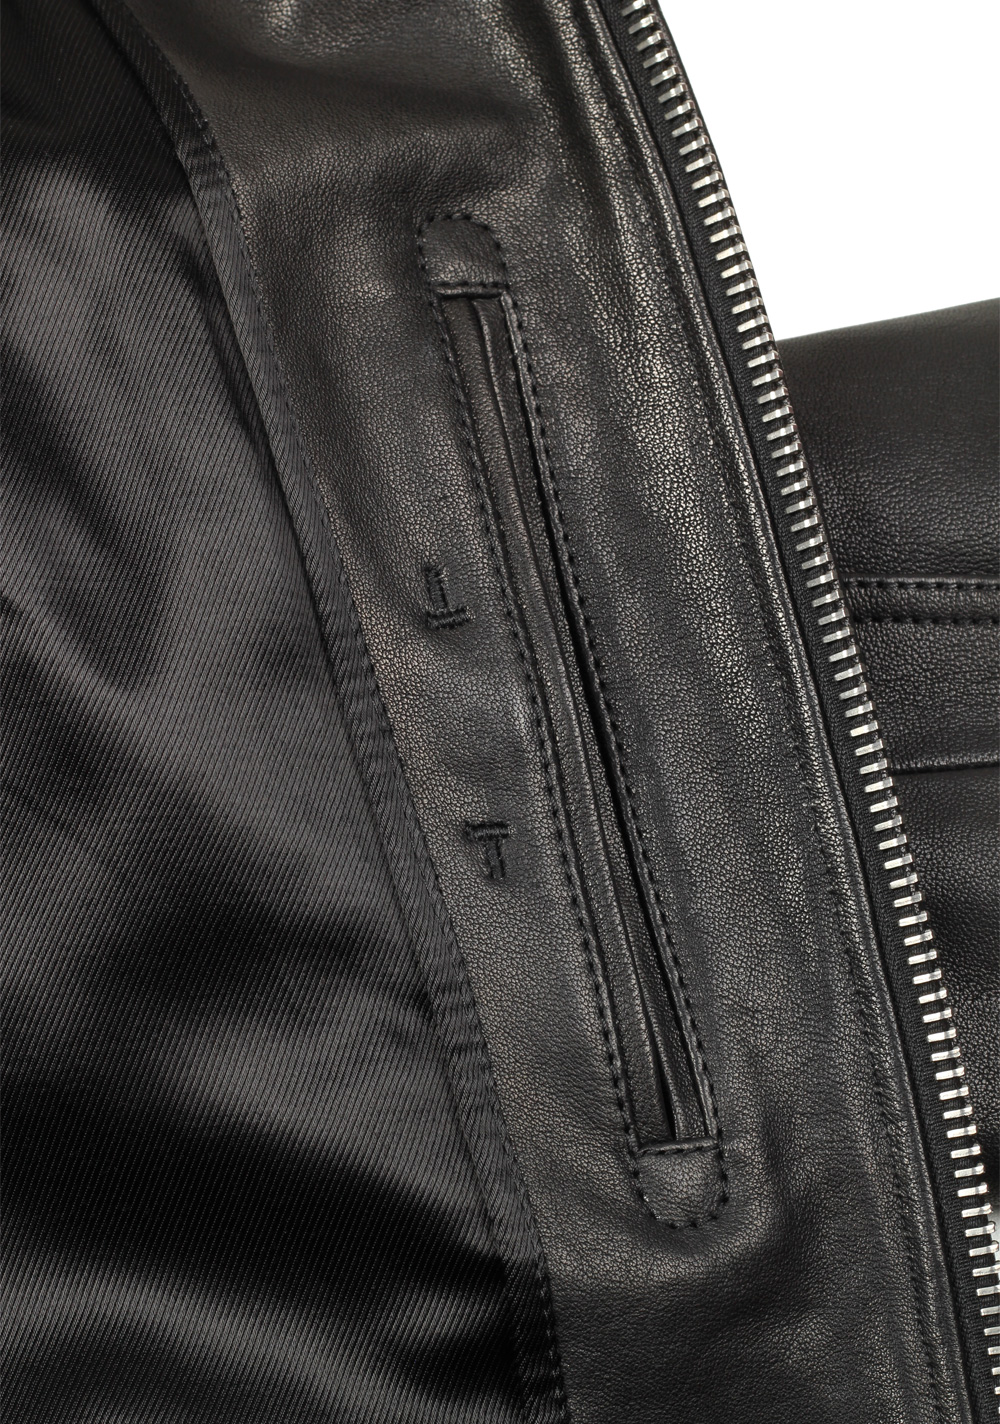 TOM FORD Black Leather Biker Coat Jacket Size 50 / 40R U.S. Outerwear ...